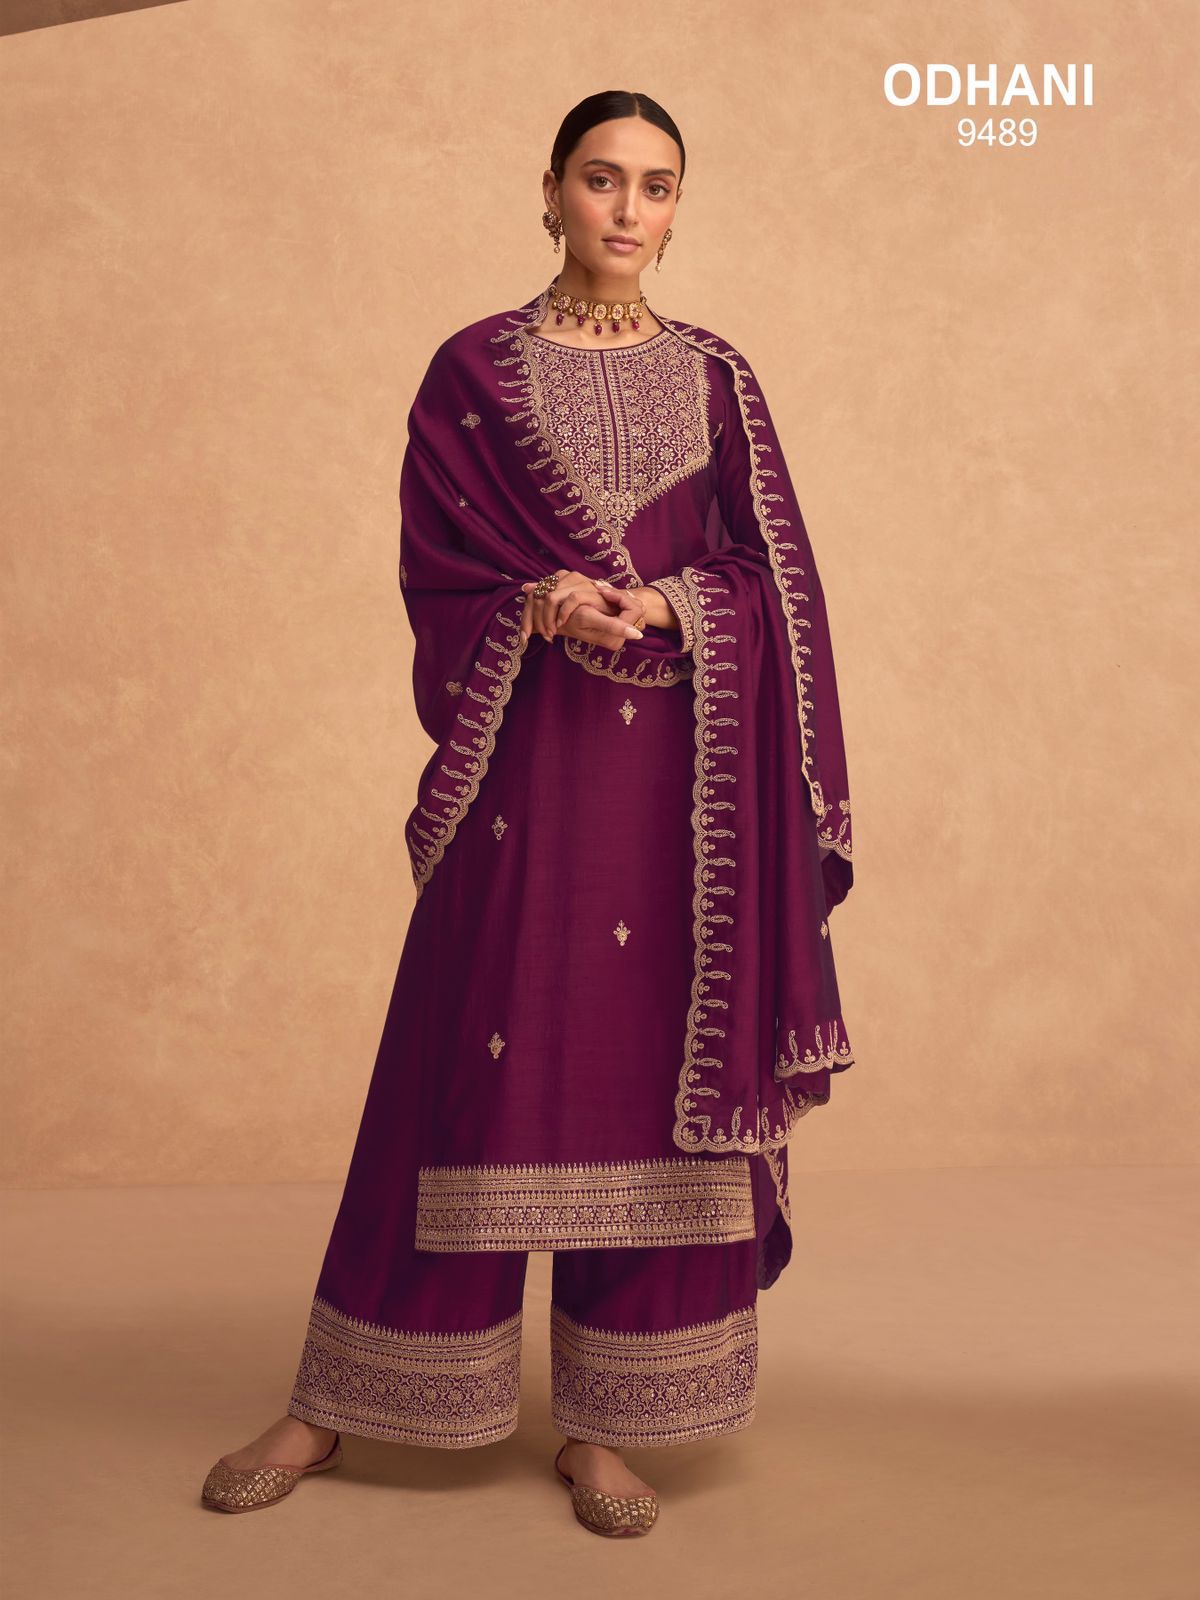 Aashirwad Odhani 9494 - Premium Silk With Embroidery Suit